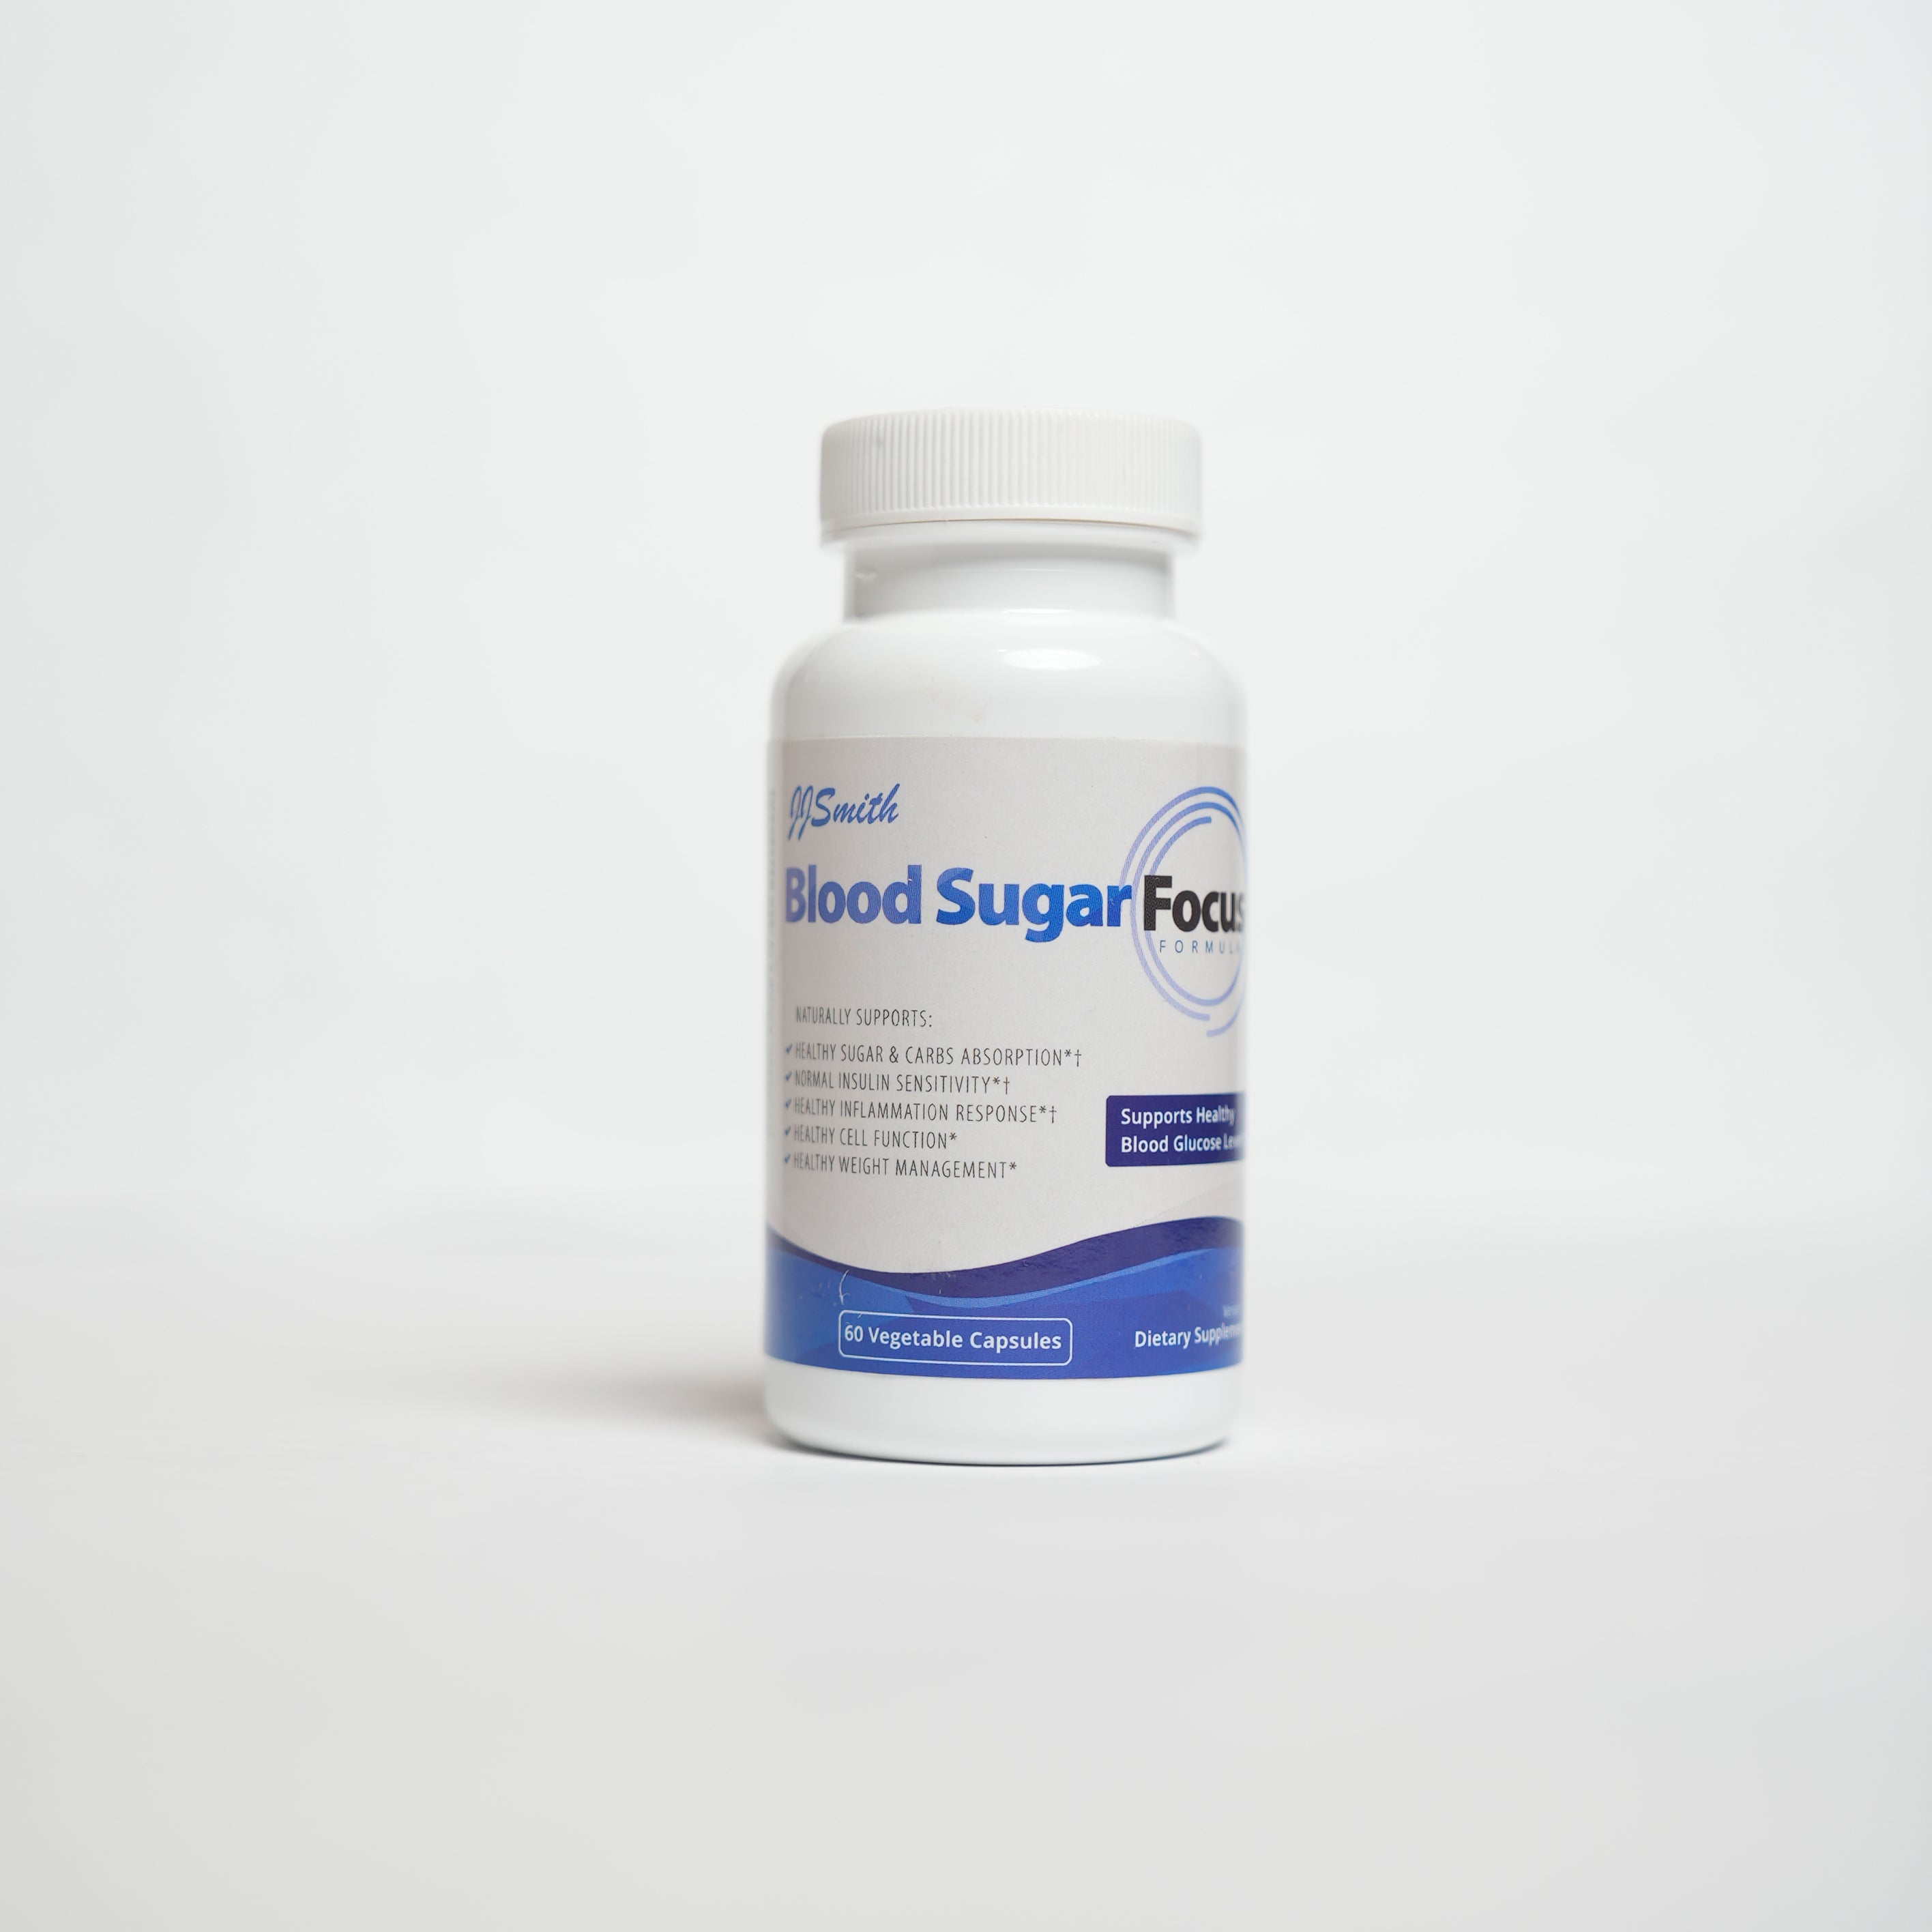 Blood Sugar Focus